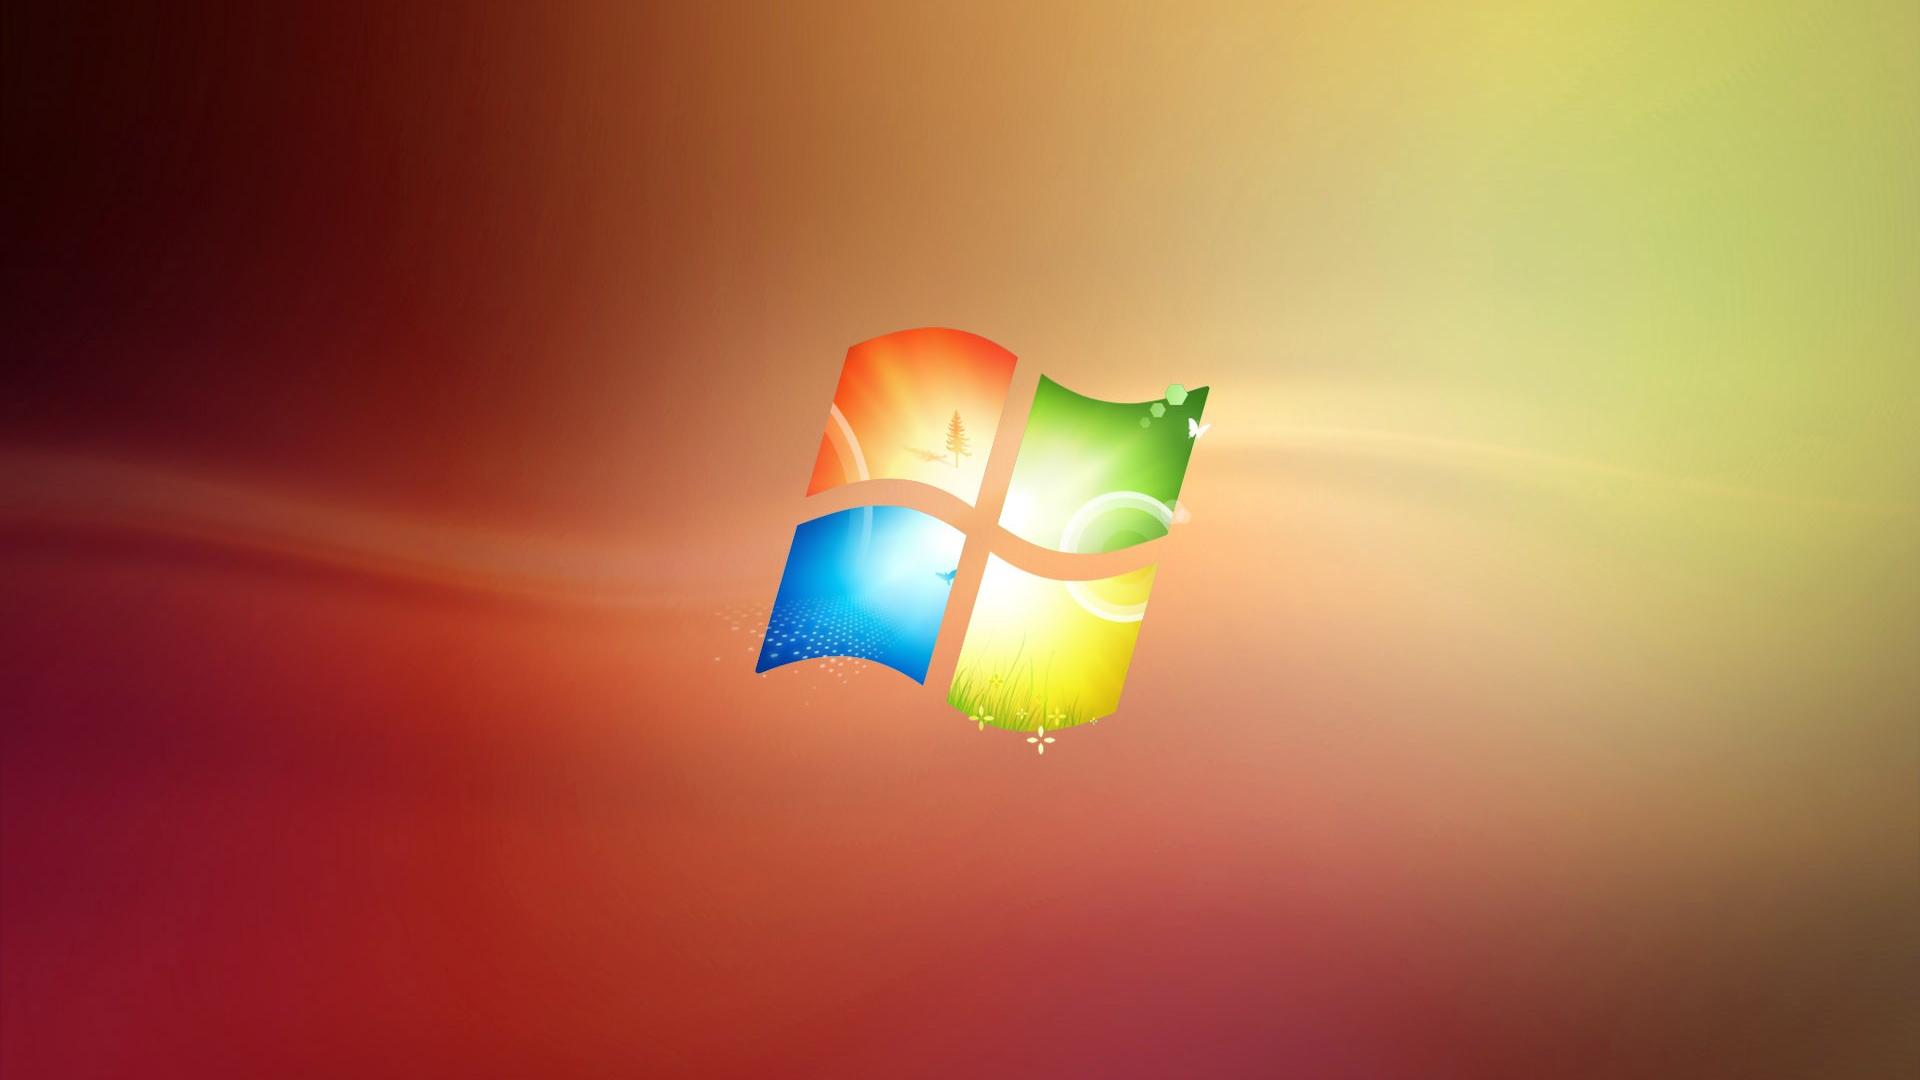 Windows Desktop Backgrounds Free Widescreen HD Windows Backgrounds